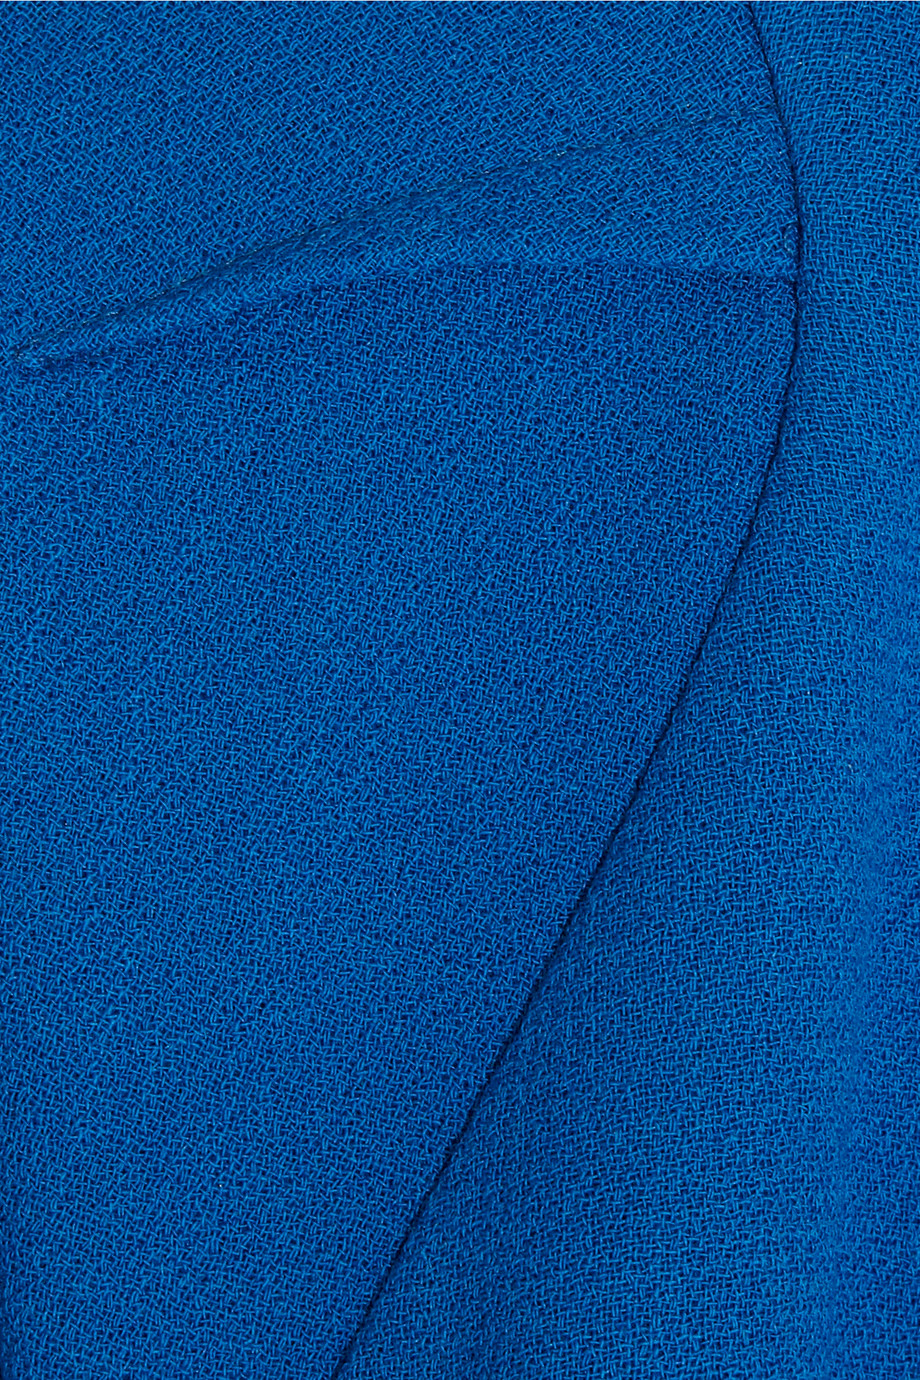 Lyst - Antonio Berardi Woolcrepe Dress in Blue